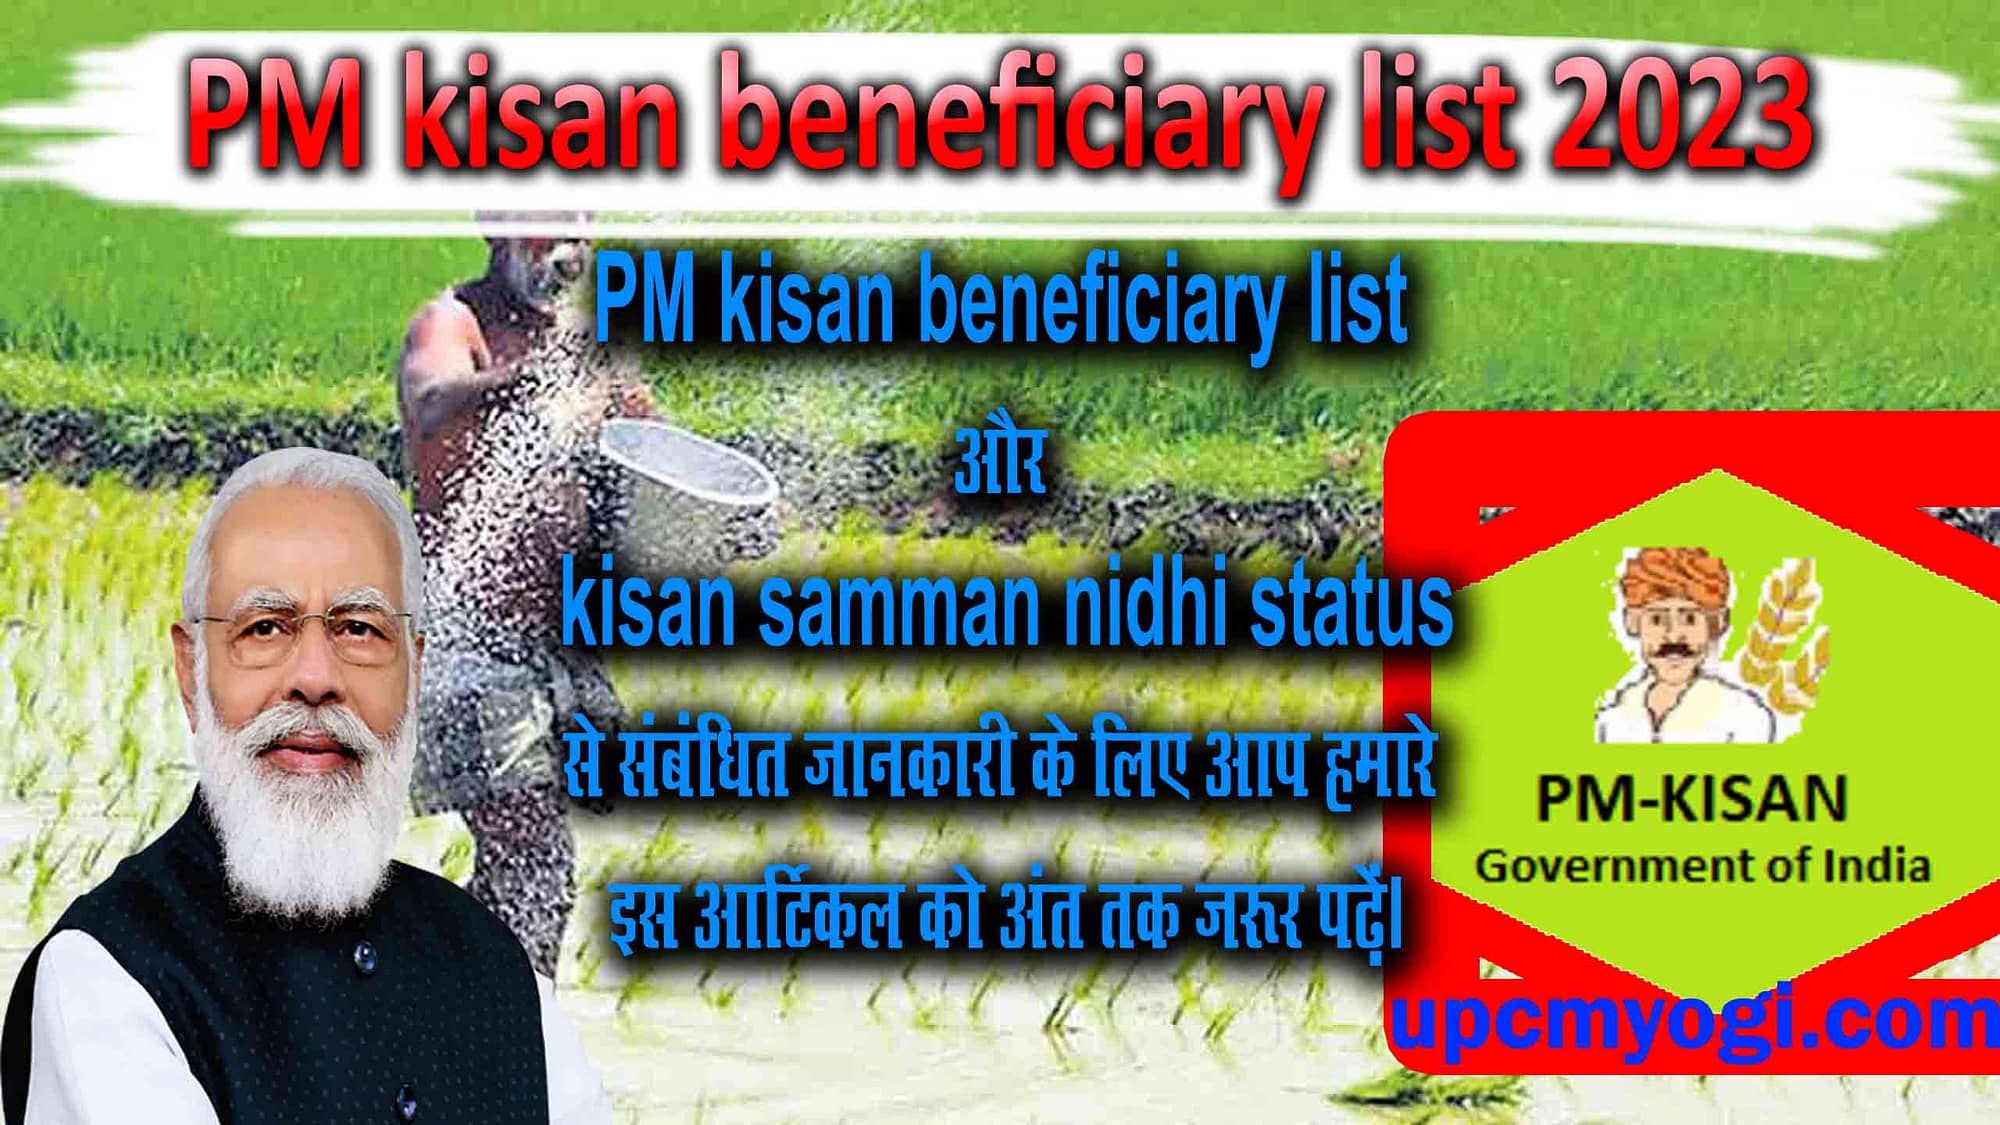 PM kisan beneficiary list 2023